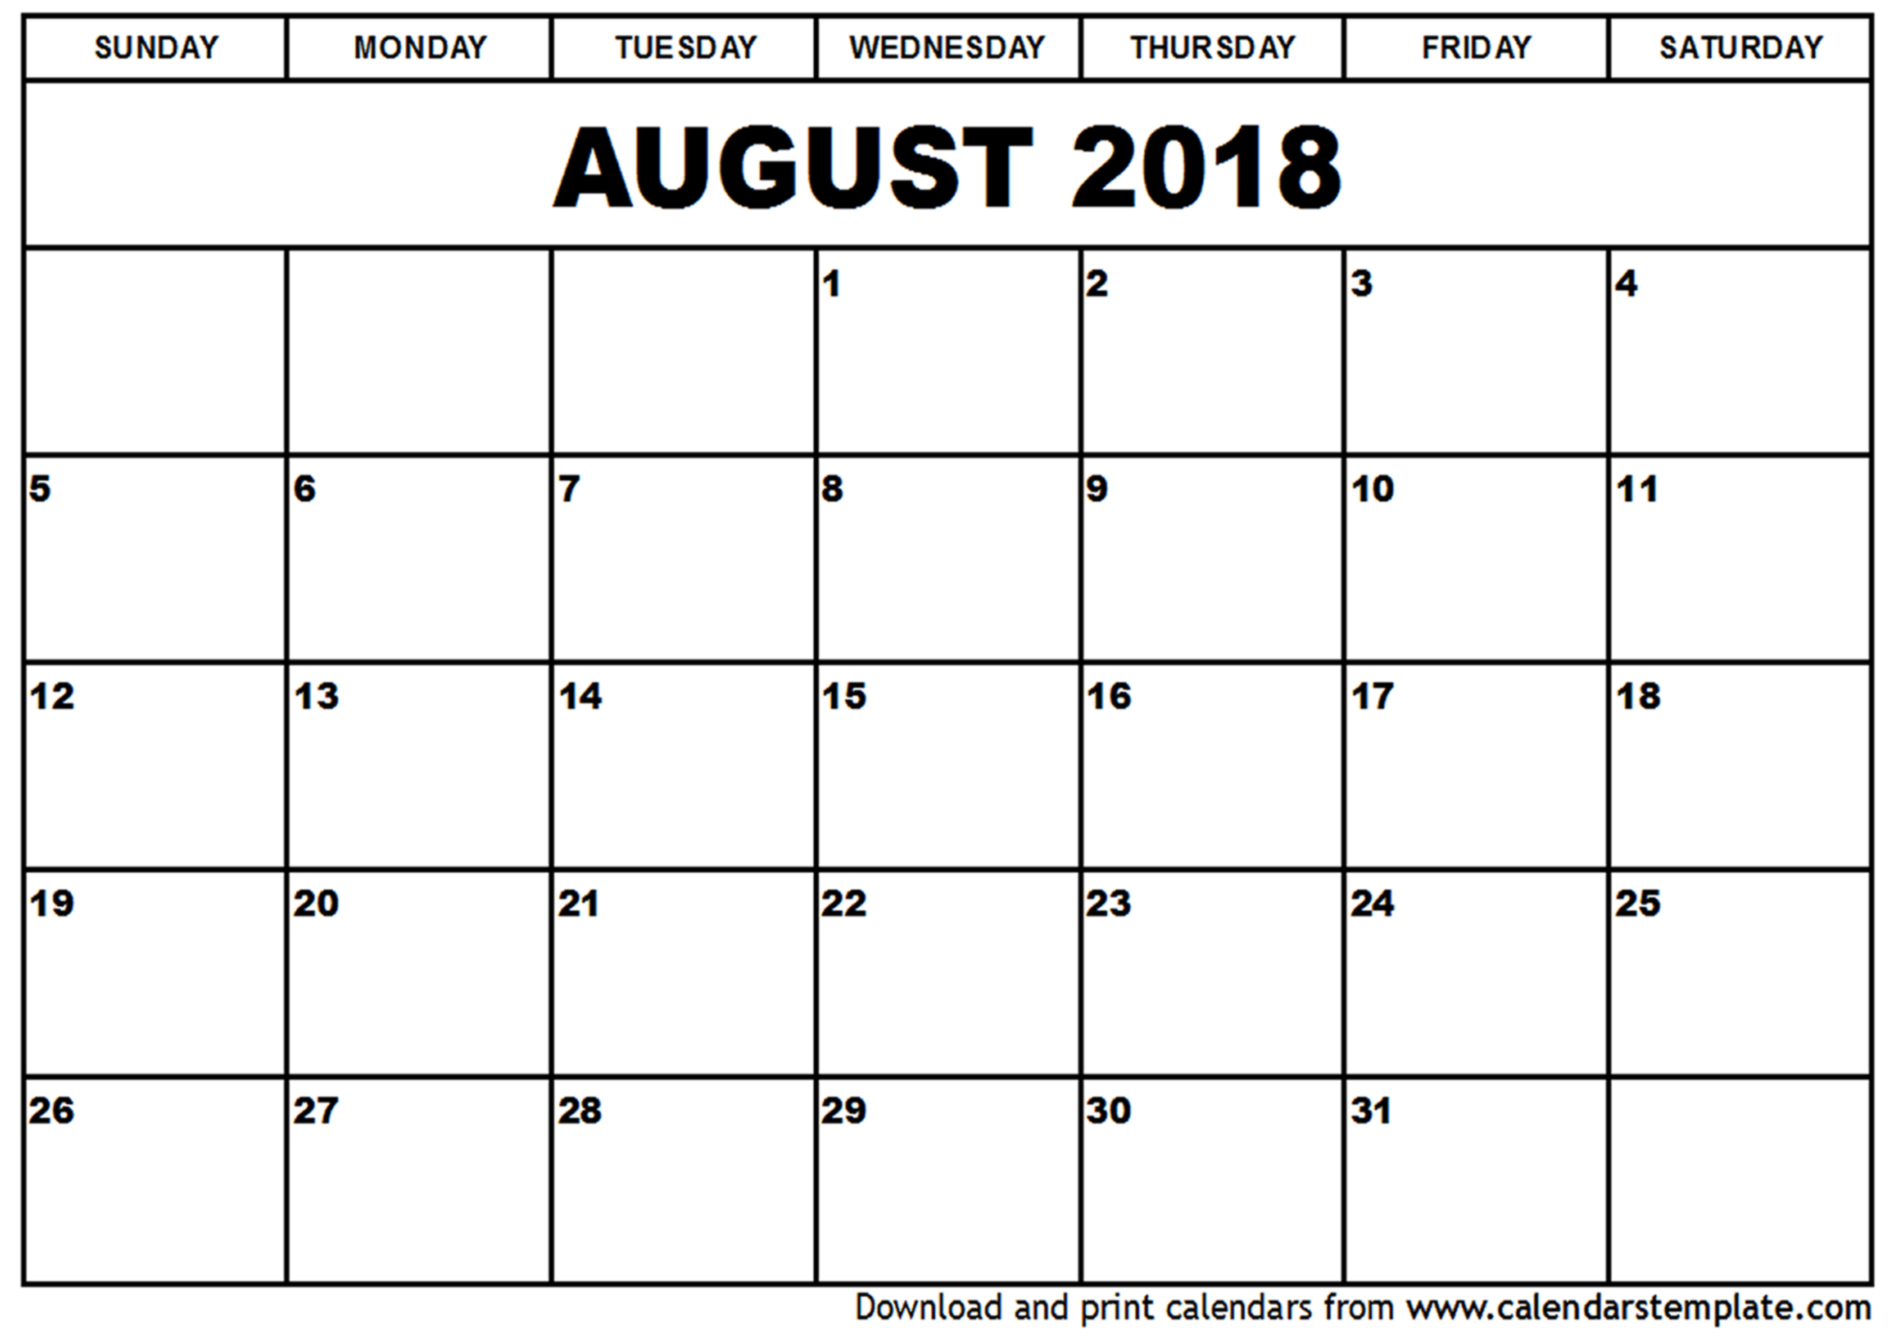 blank august 2018 calendar printable Targer.golden dragon.co